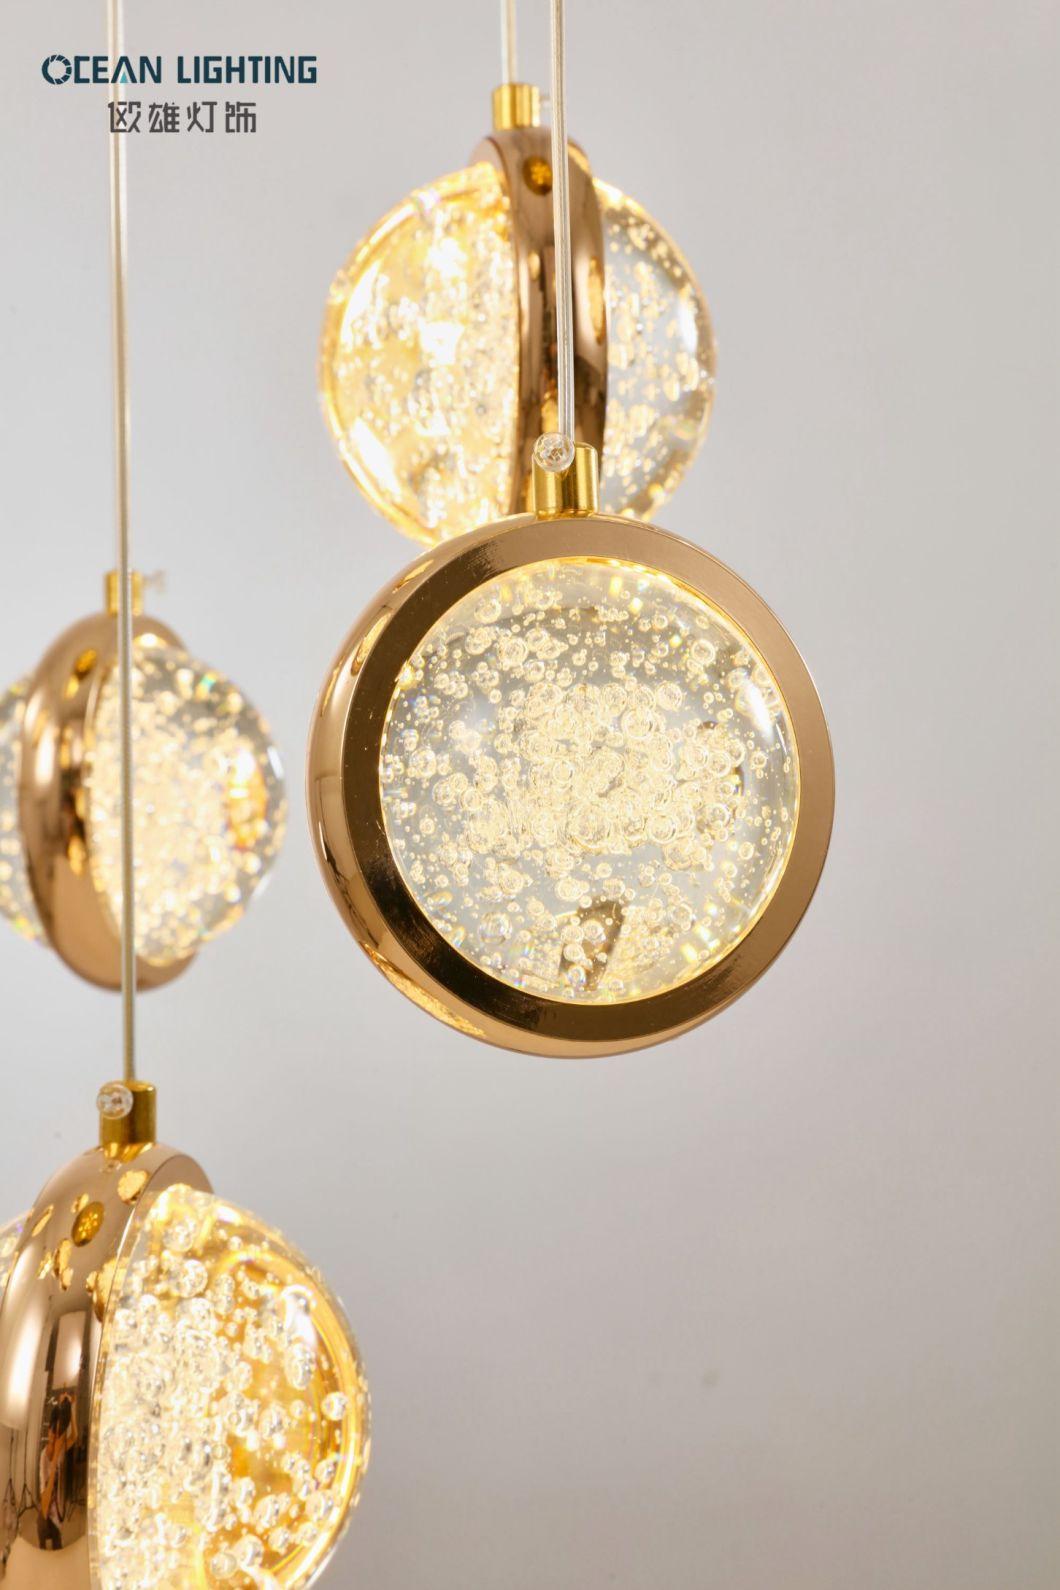 Ocean Lighting New Pendant Golden Customized Bubble Ball Crystal Chandelier Stair Pendant Lamp